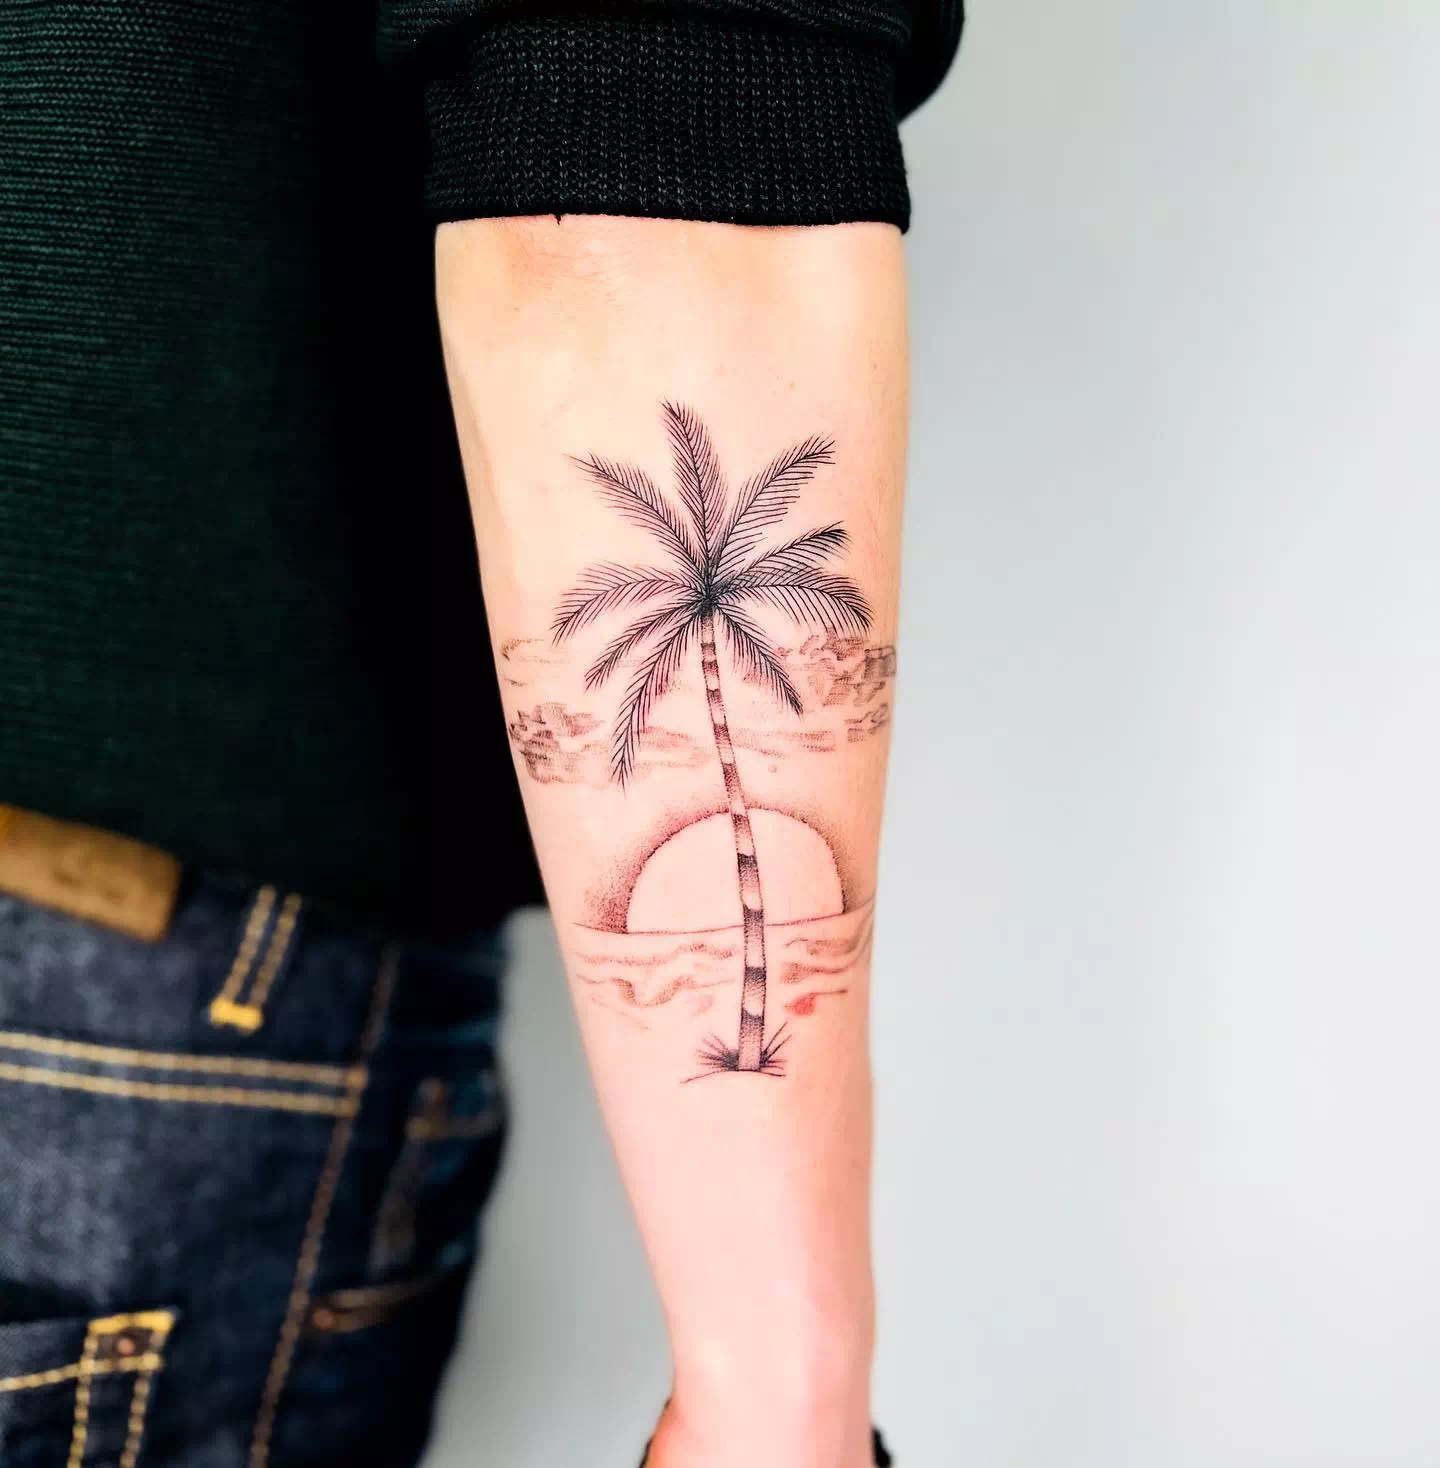 Tatuaje de una palmera en el antebrazo 1